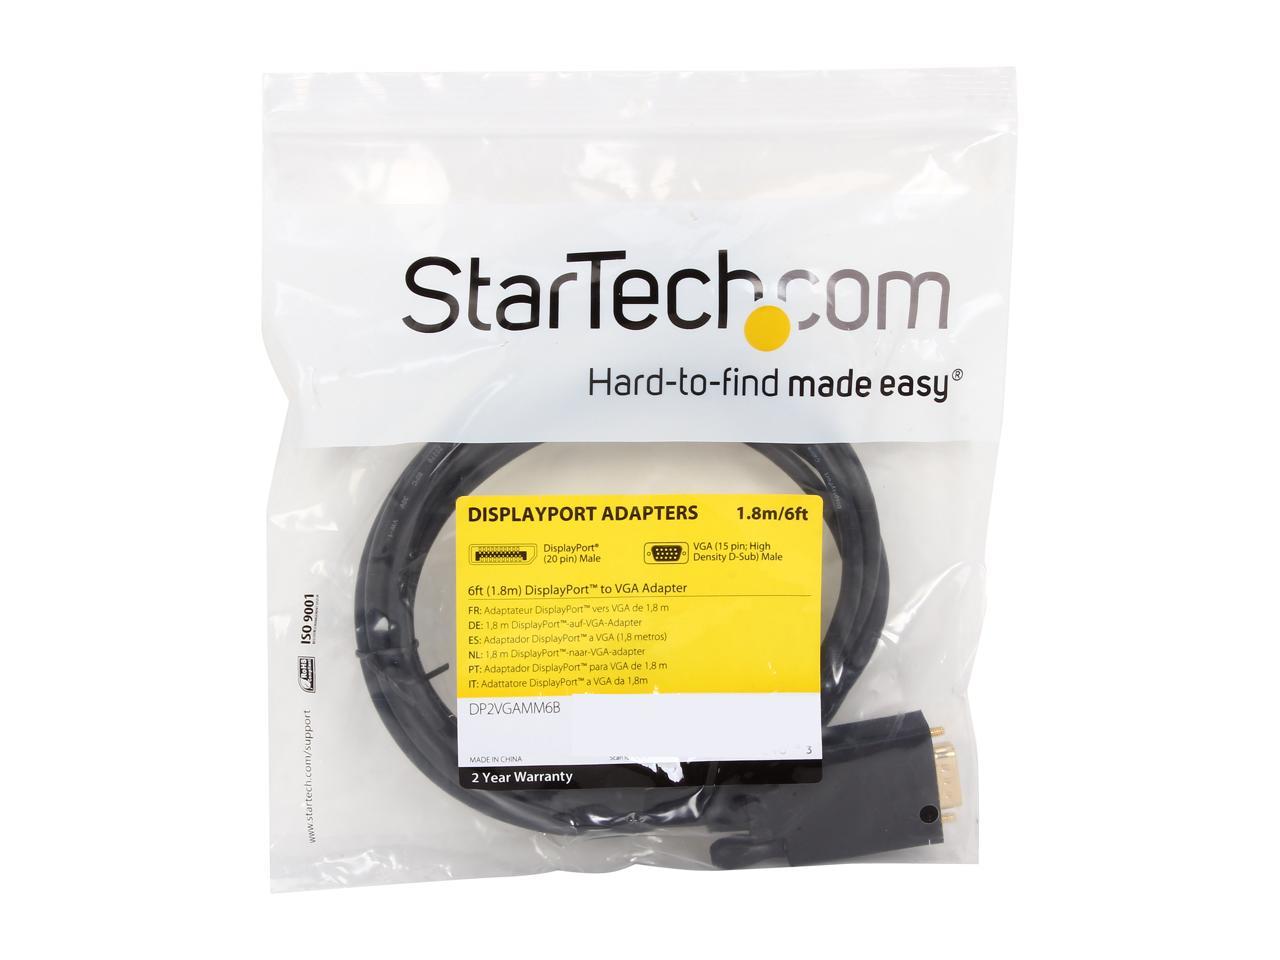 StarTech.com DP2VGAMM6B 6 ft DisplayPort to VGA Adapter Cable - DP to VGA Video Converter - Active DisplayPort to VGA Cable for PC 1920x1200 - Black